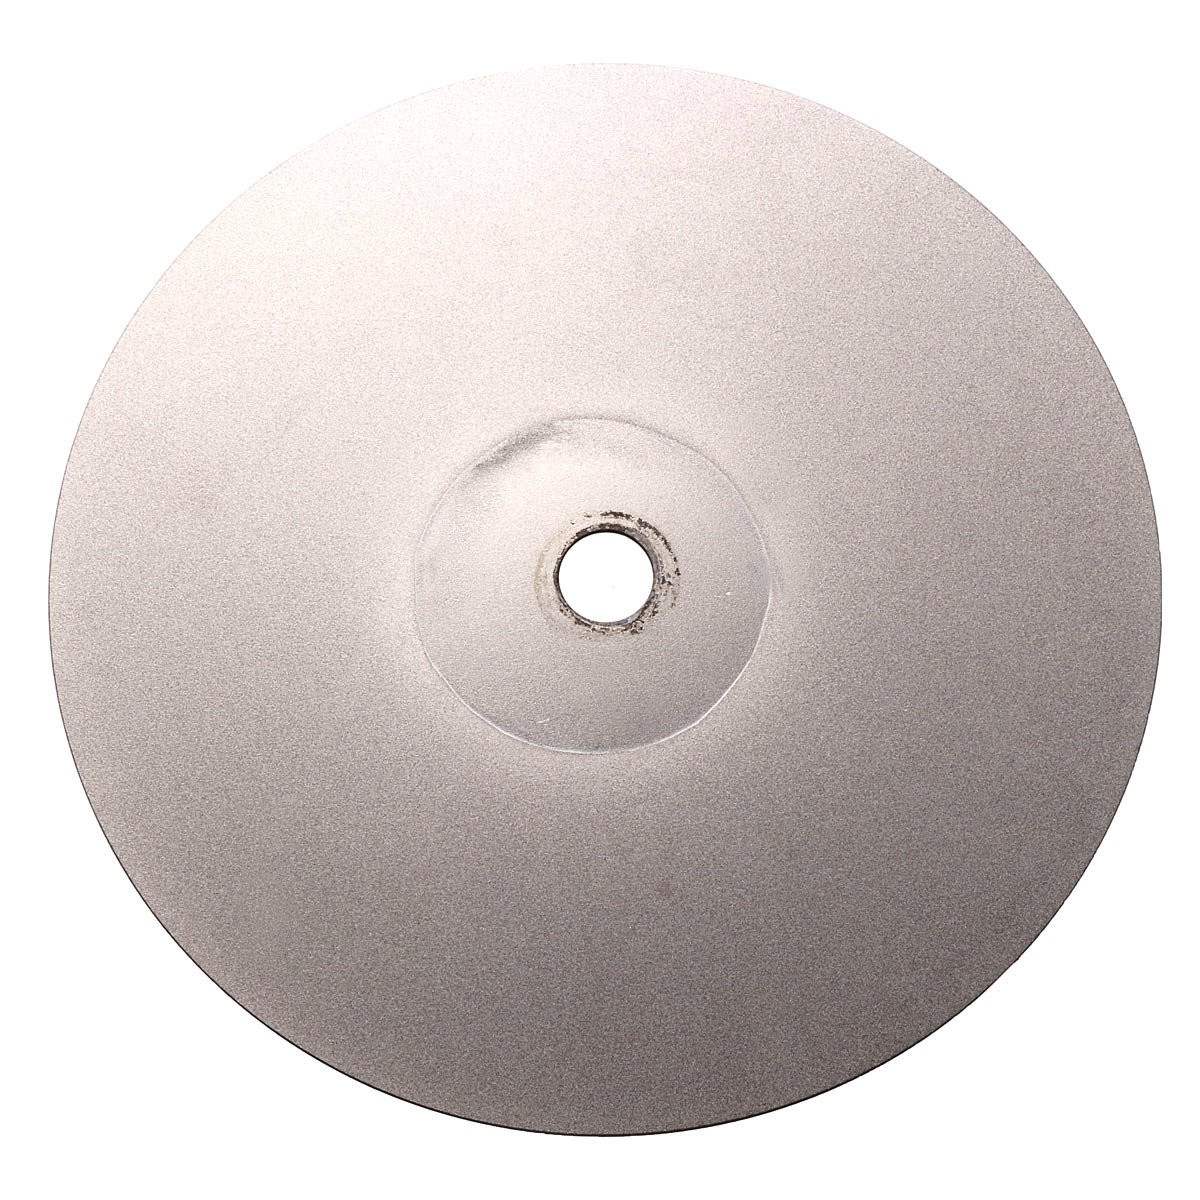 3Pcs 6" Inch 150mm Diamond Grinding Wheel Grit 240# 600# 3000# Flat Lap Disk Wheel Grinding Pad Tool Power Tool Accessories